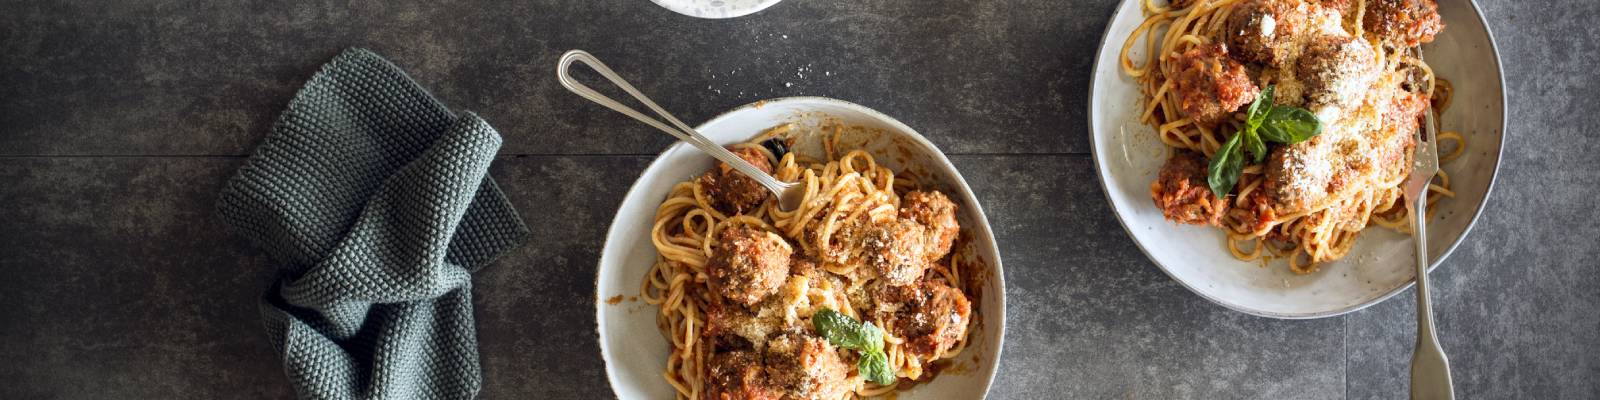 Pasta Garofalo - Spaghetti with meatballs